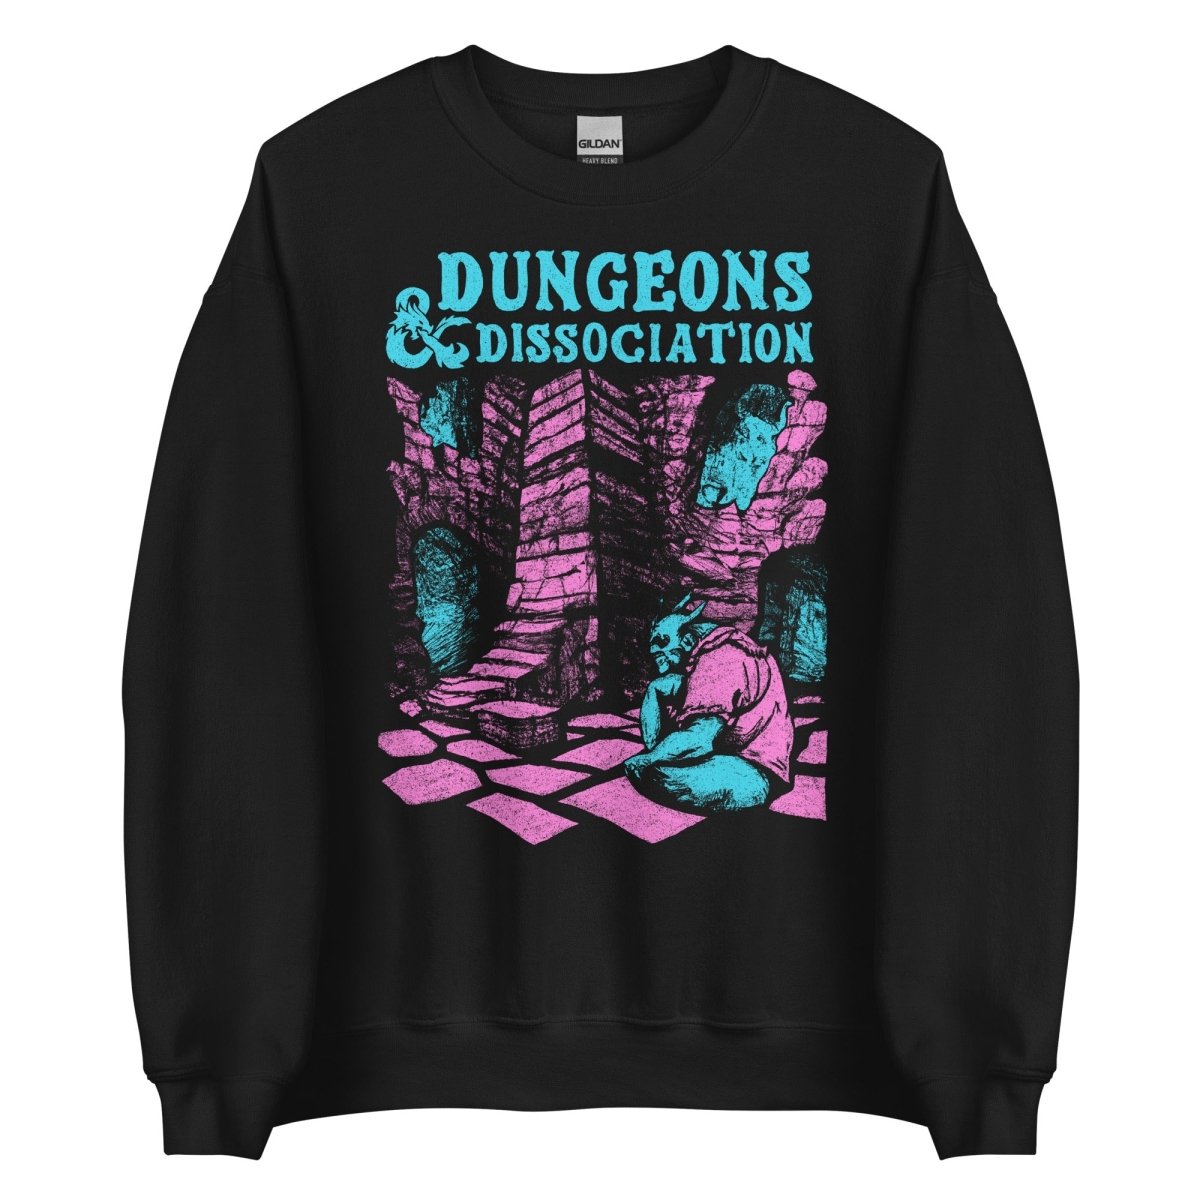 Dungeons & Dissociation Sweatshirt - Sweatshirt - Pretty Bad Co.